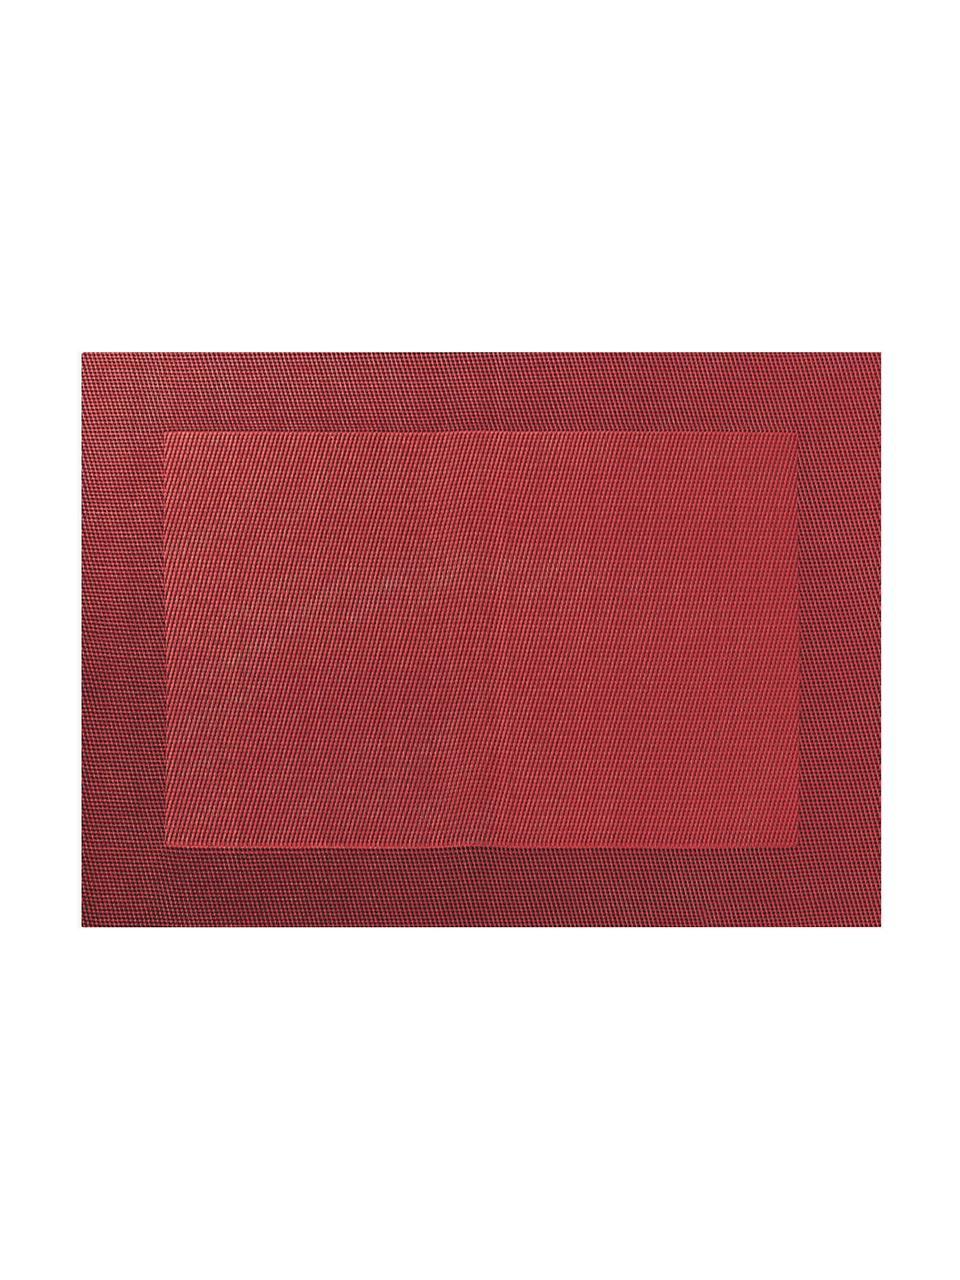 Kunststoffen placemats Trefl, 2 stuks, Kunststof (PVC), Rood, B 33 x L 46 cm